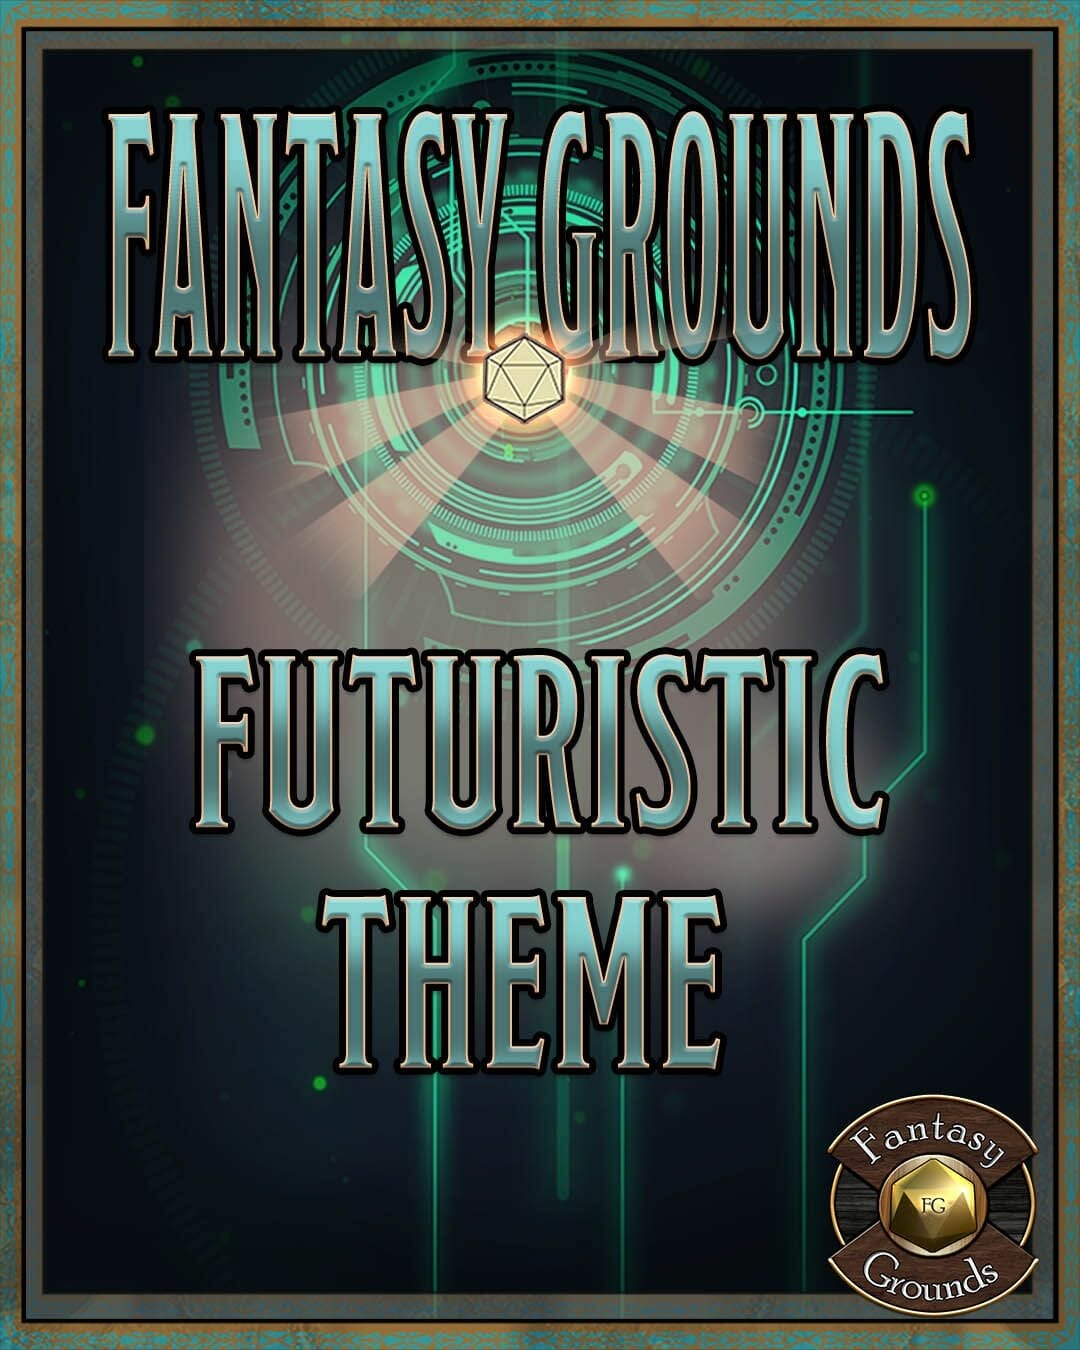 Fantasy Grounds Futuristic Theme